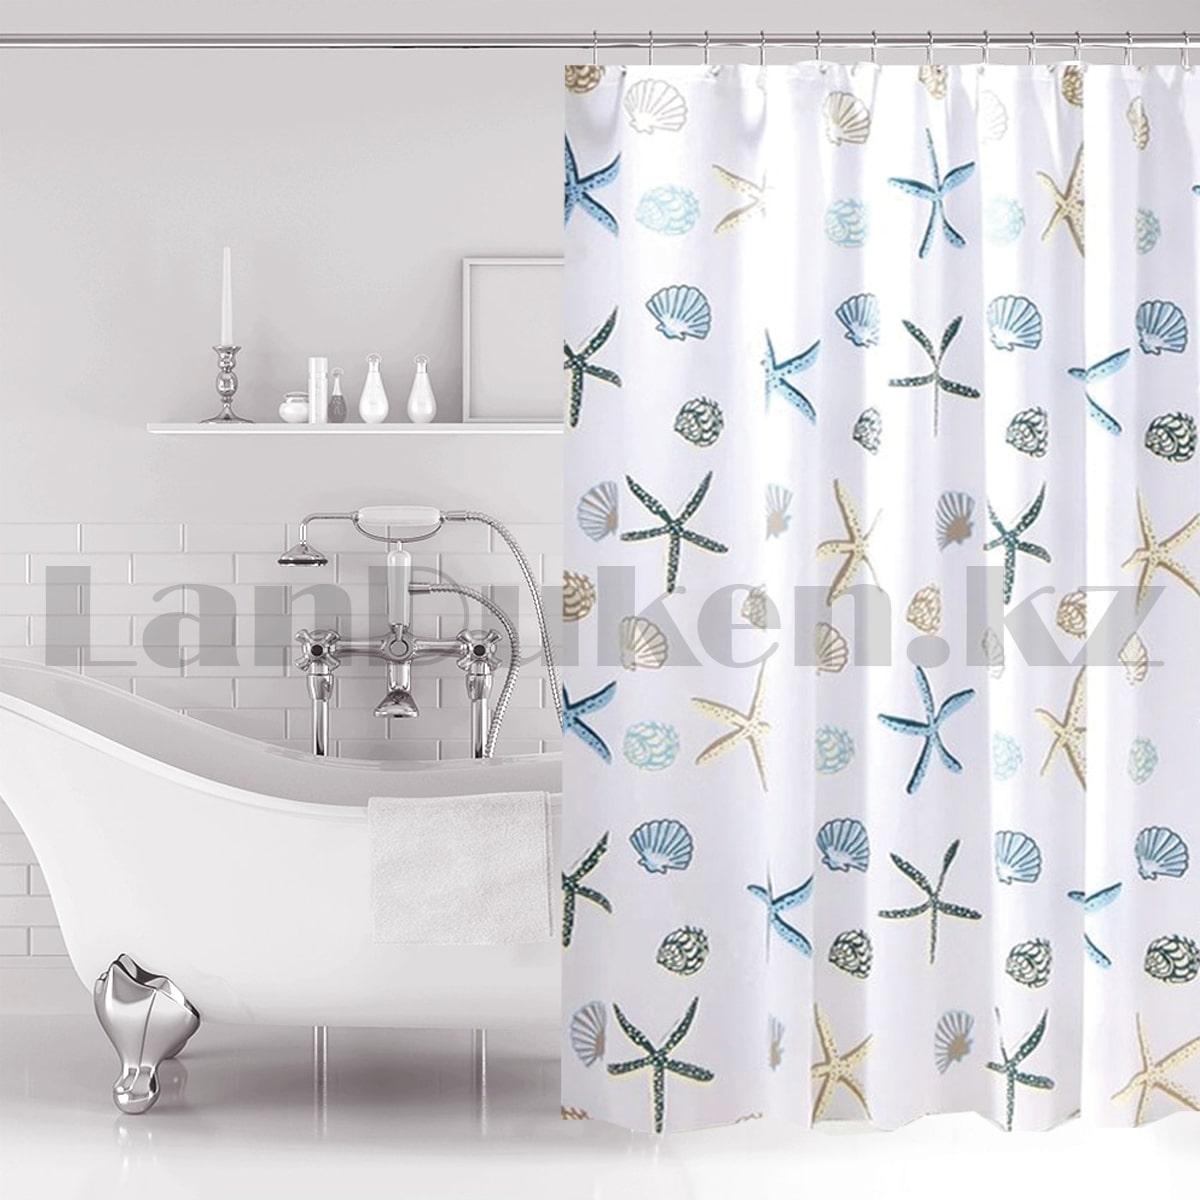 Тканевая шторка полупрозрачная для ванной Bath Fashion для душа 180х180 см с ракушками